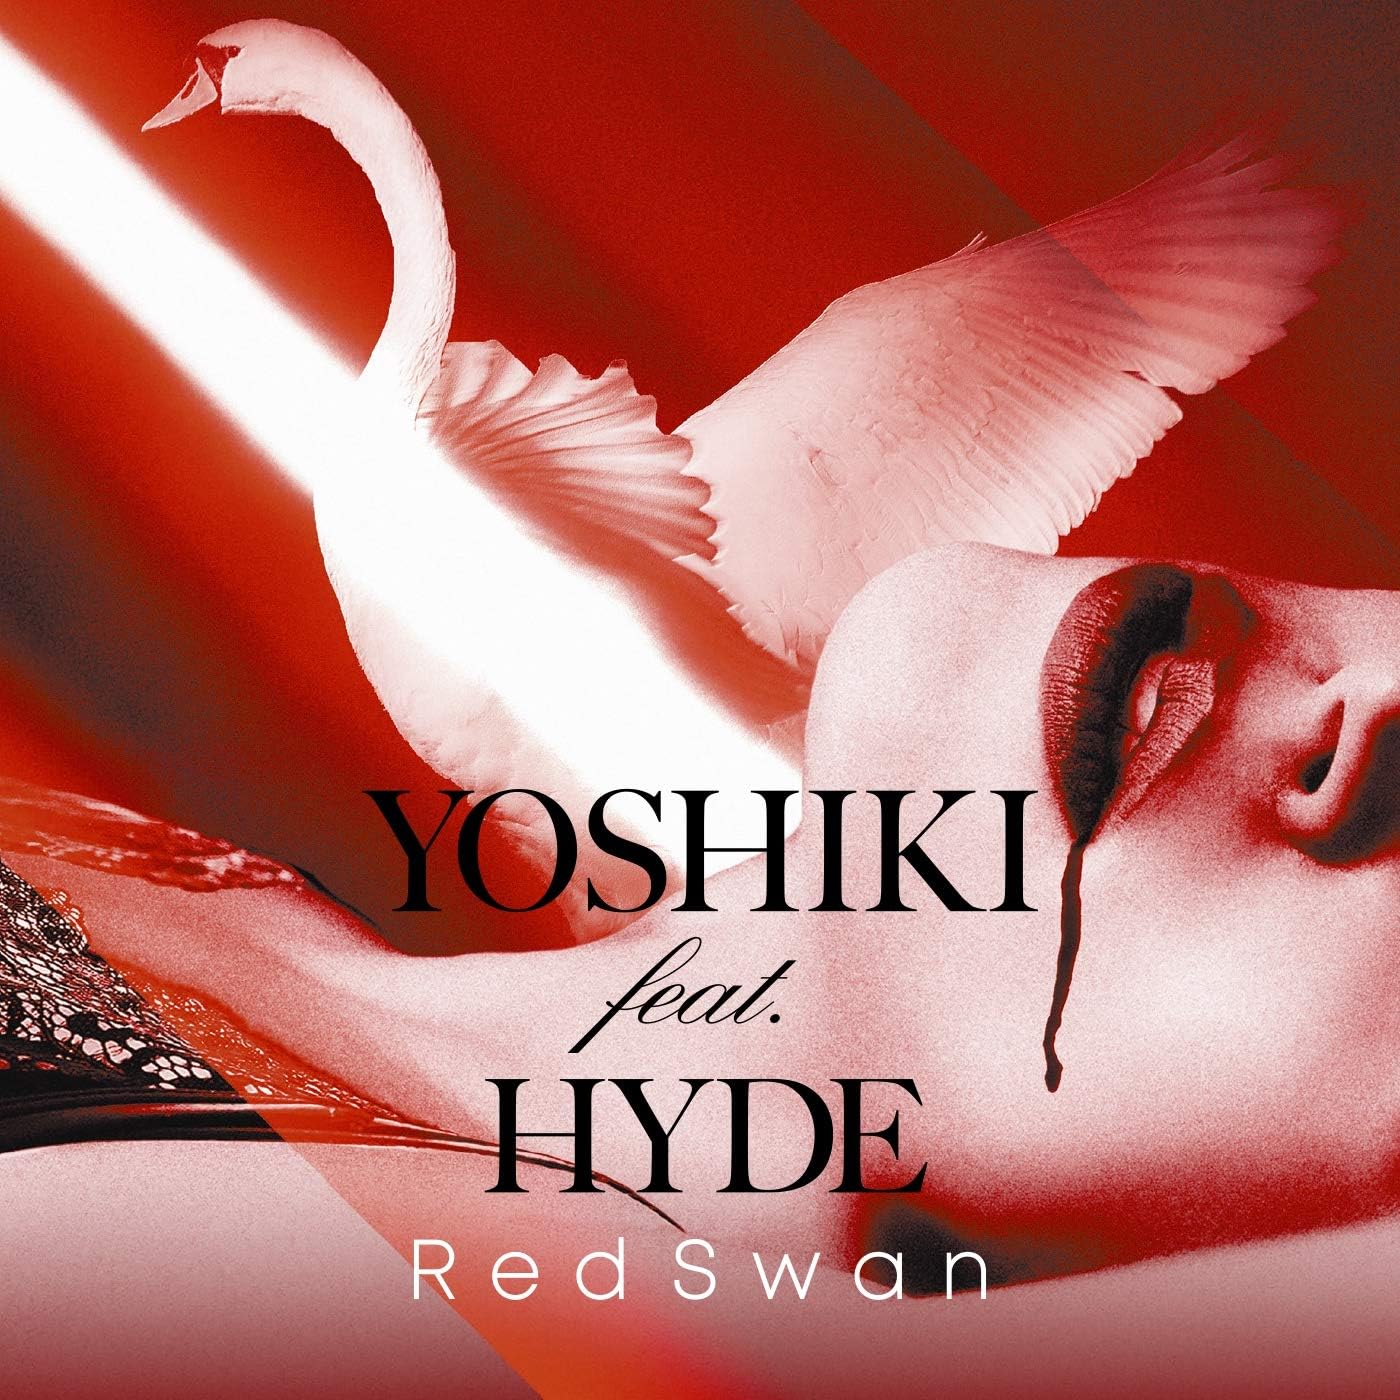 Yoshiki & Hyde — Red Swan cover artwork